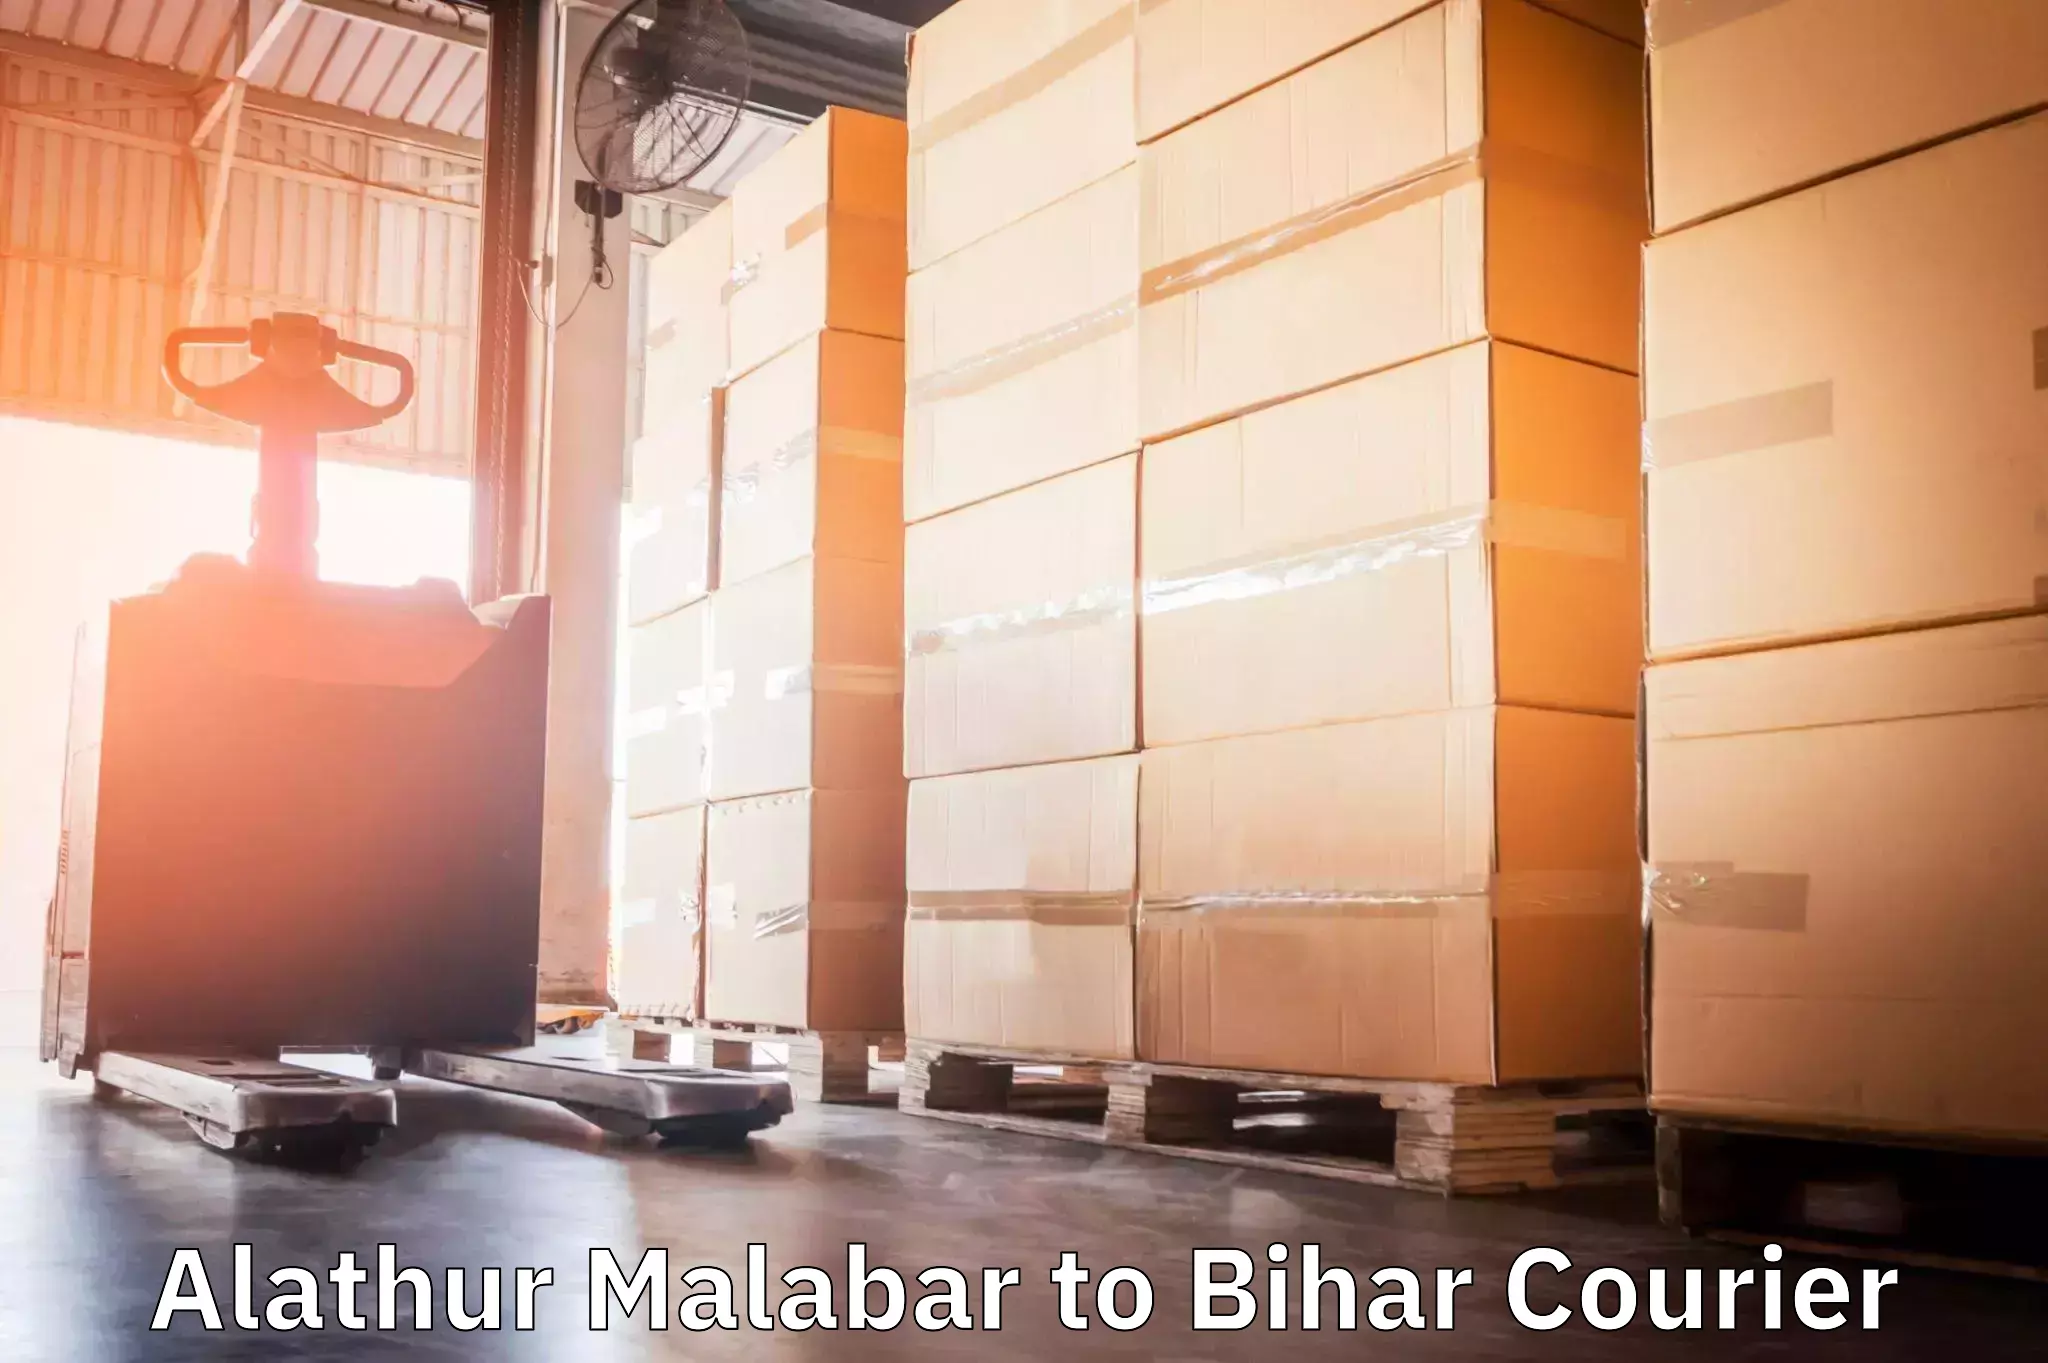 Efficient order fulfillment Alathur Malabar to Valmiki Nagar